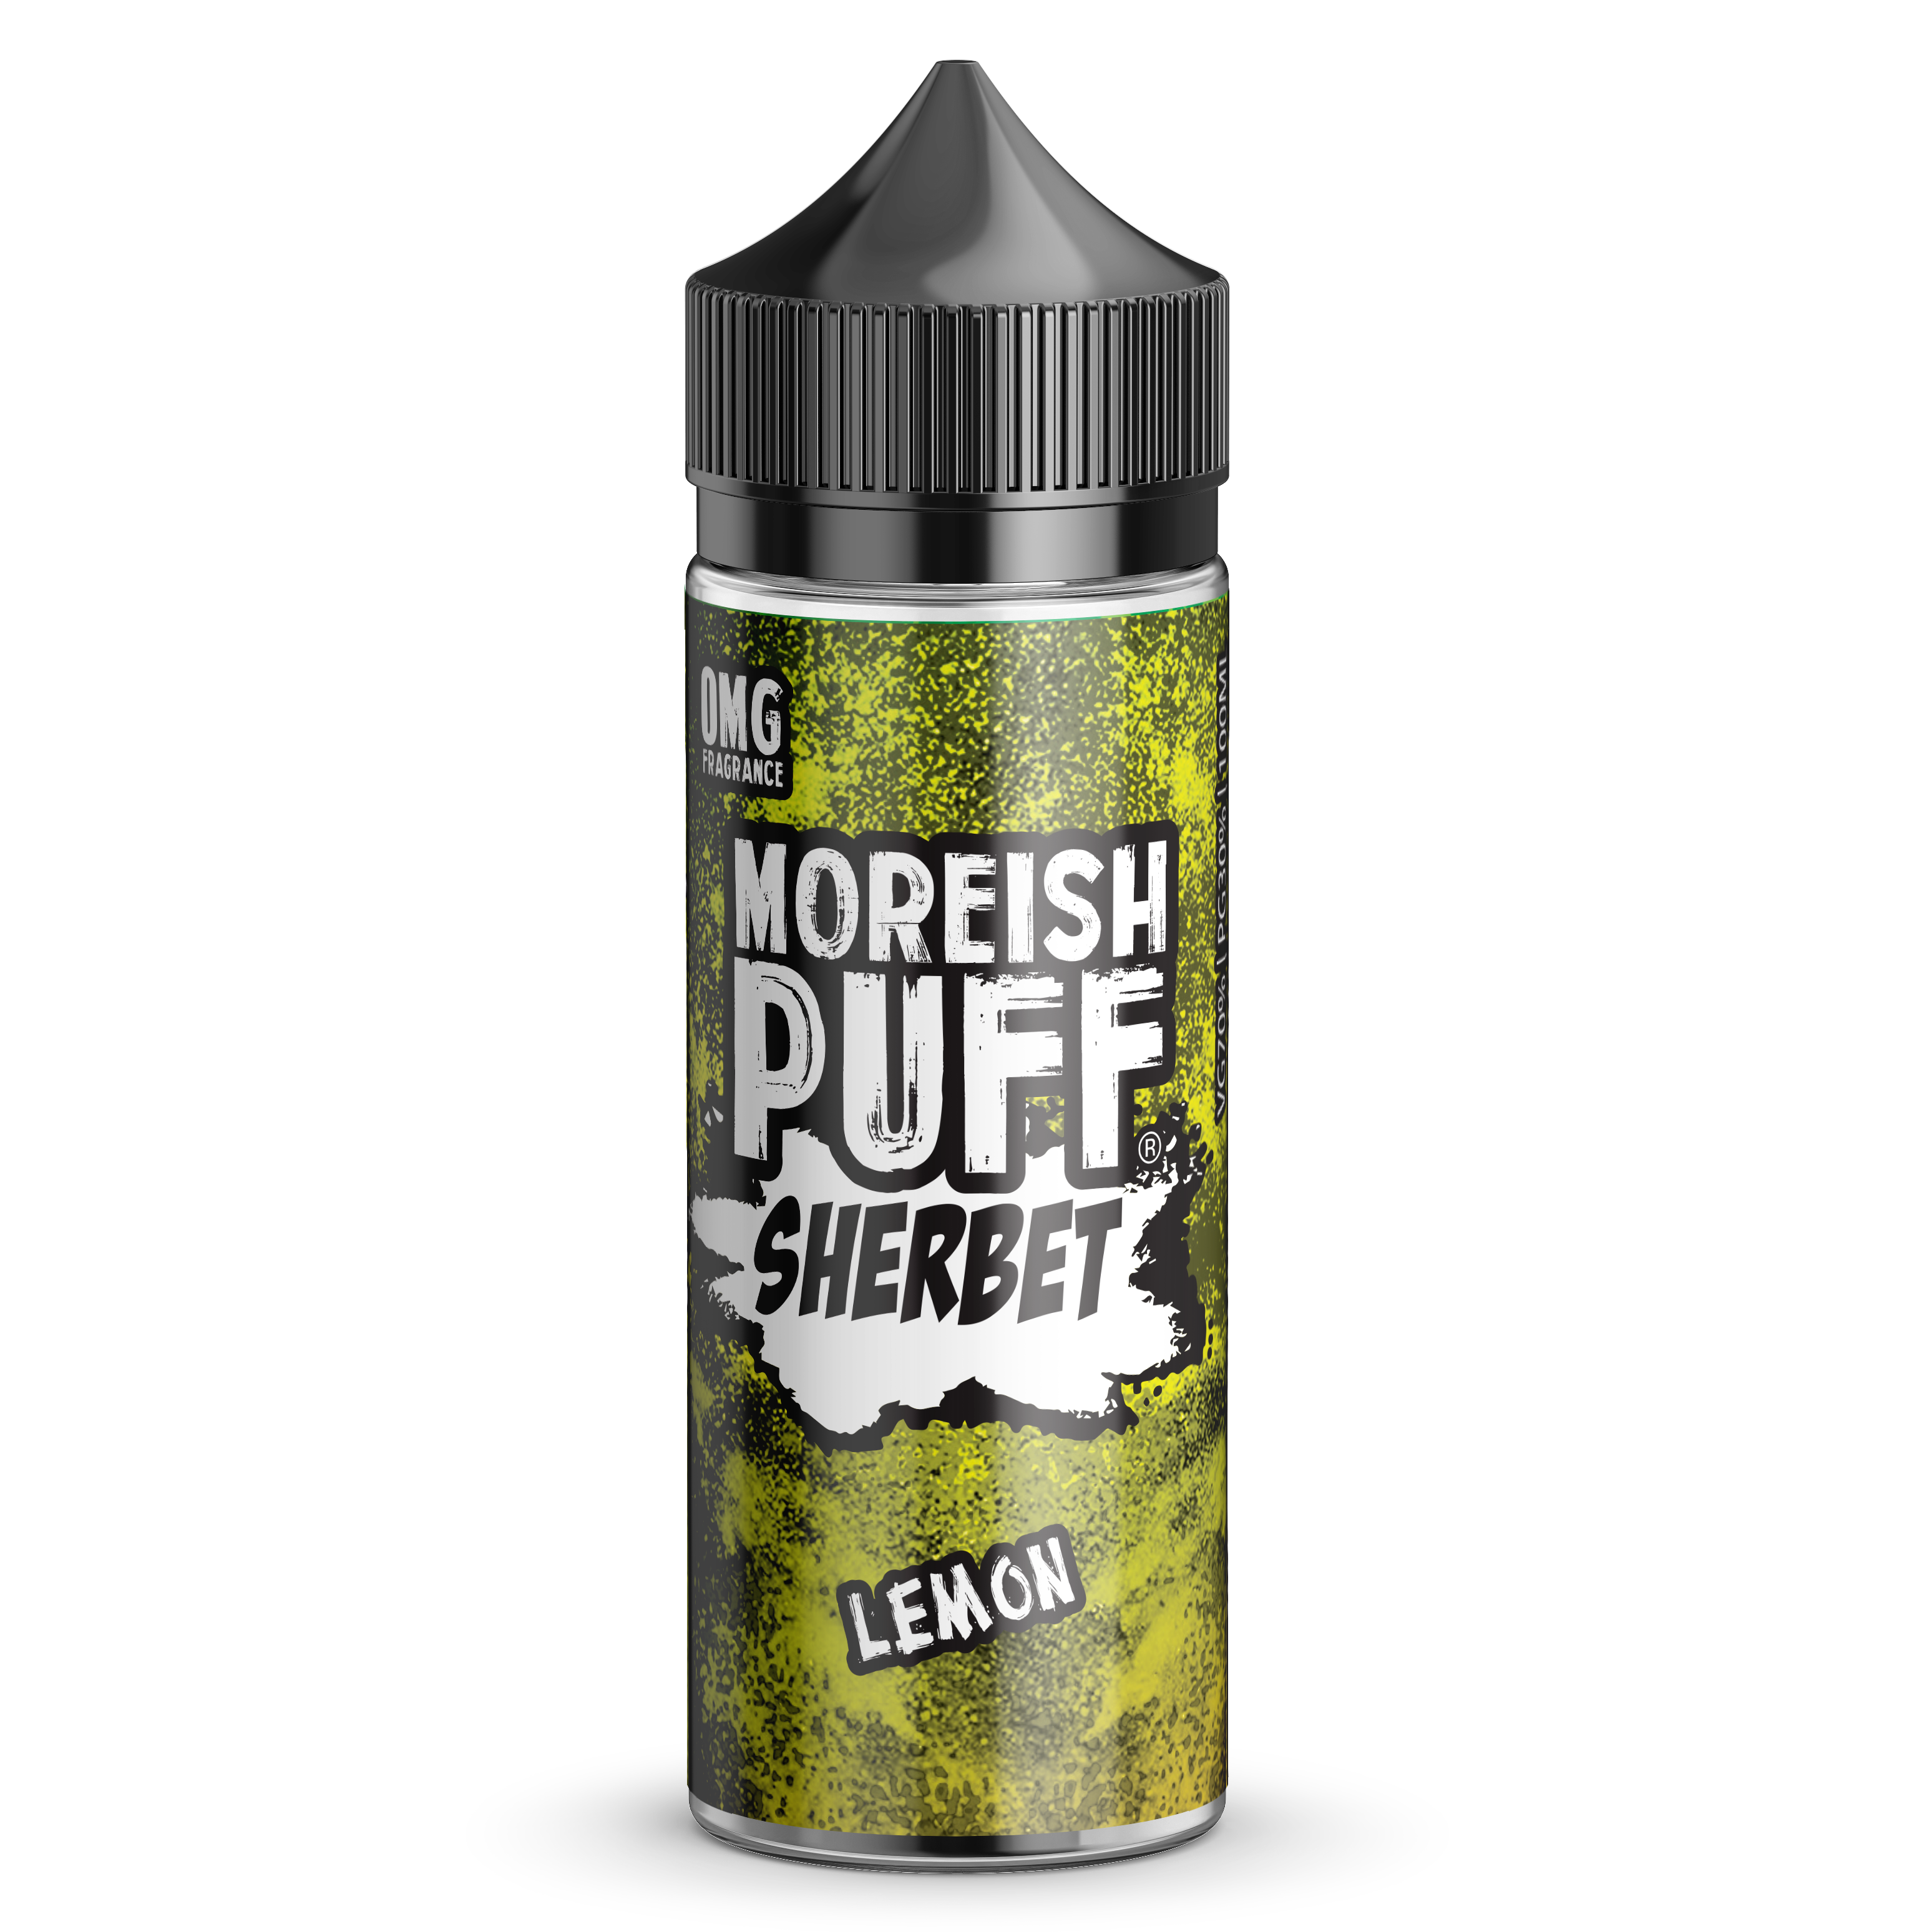 Moreish Puff Sherbet: Lemon Sherbet 0mg 100ml Shortfill E-Liquid